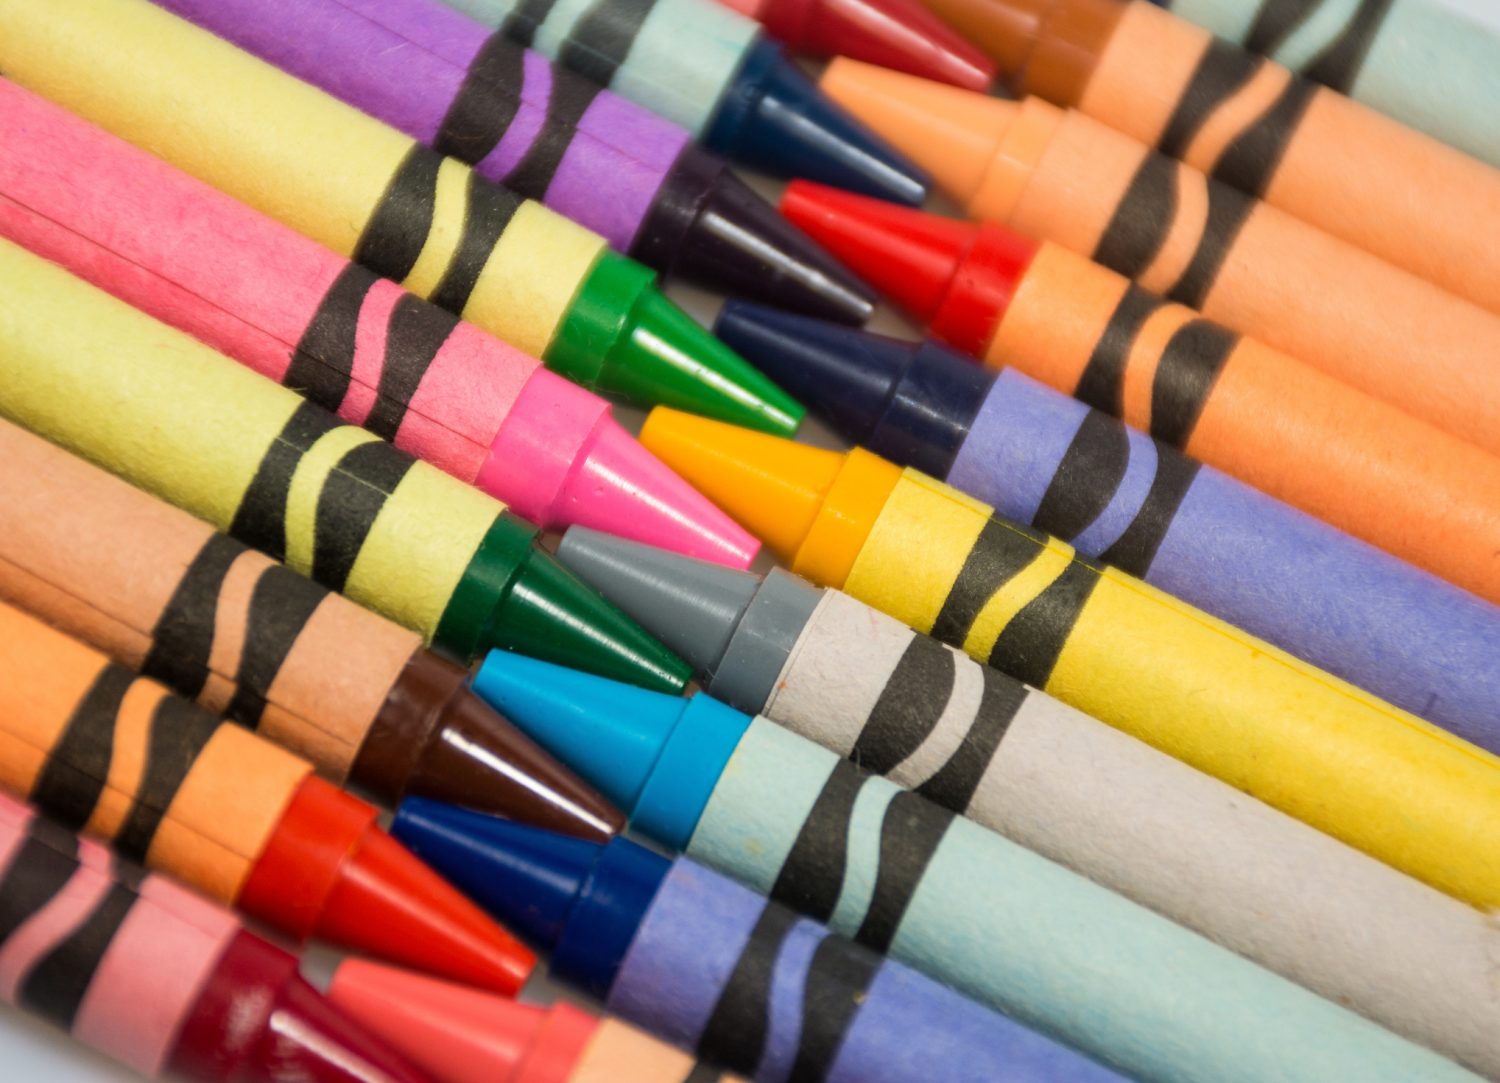 Closeup of multuplie colored crayons on a diagonal array